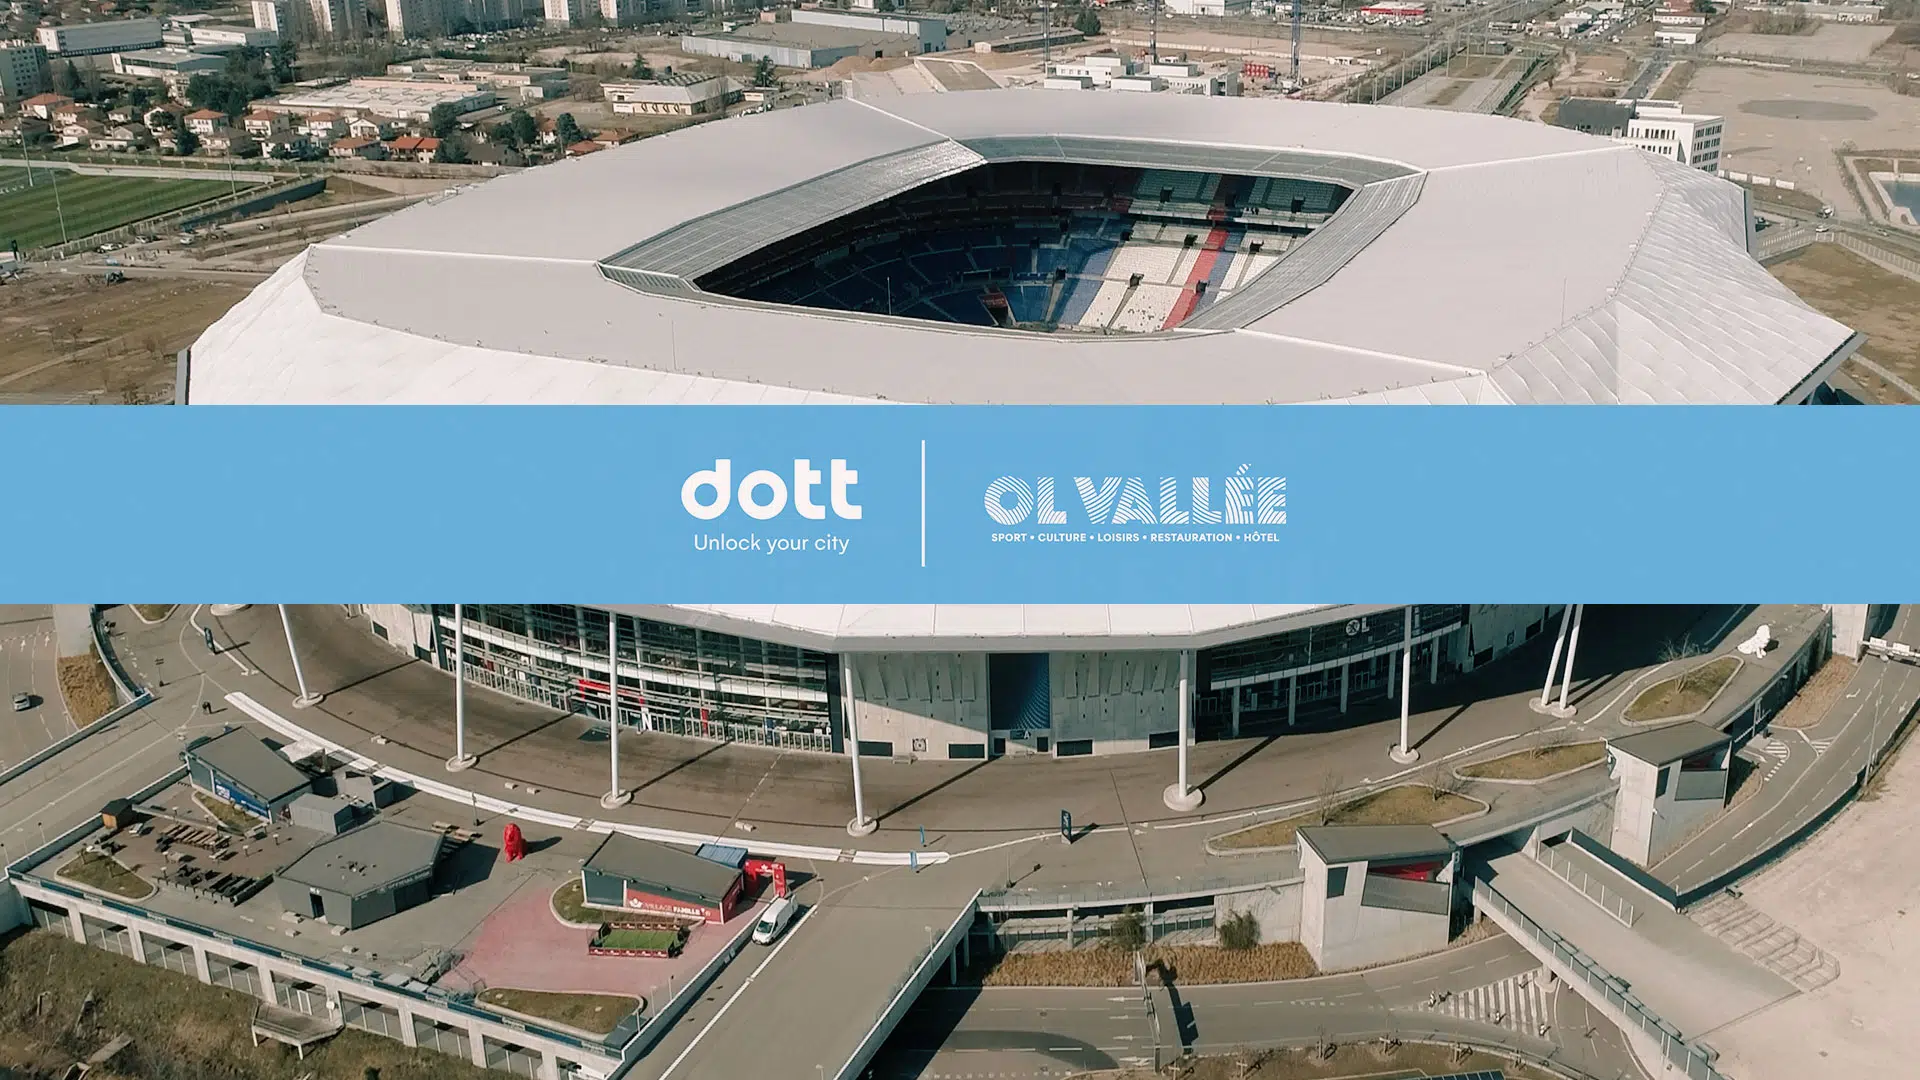 site-drone-dott-ol-vallee-groupama-stadium-lyon-monsieur-recording-video